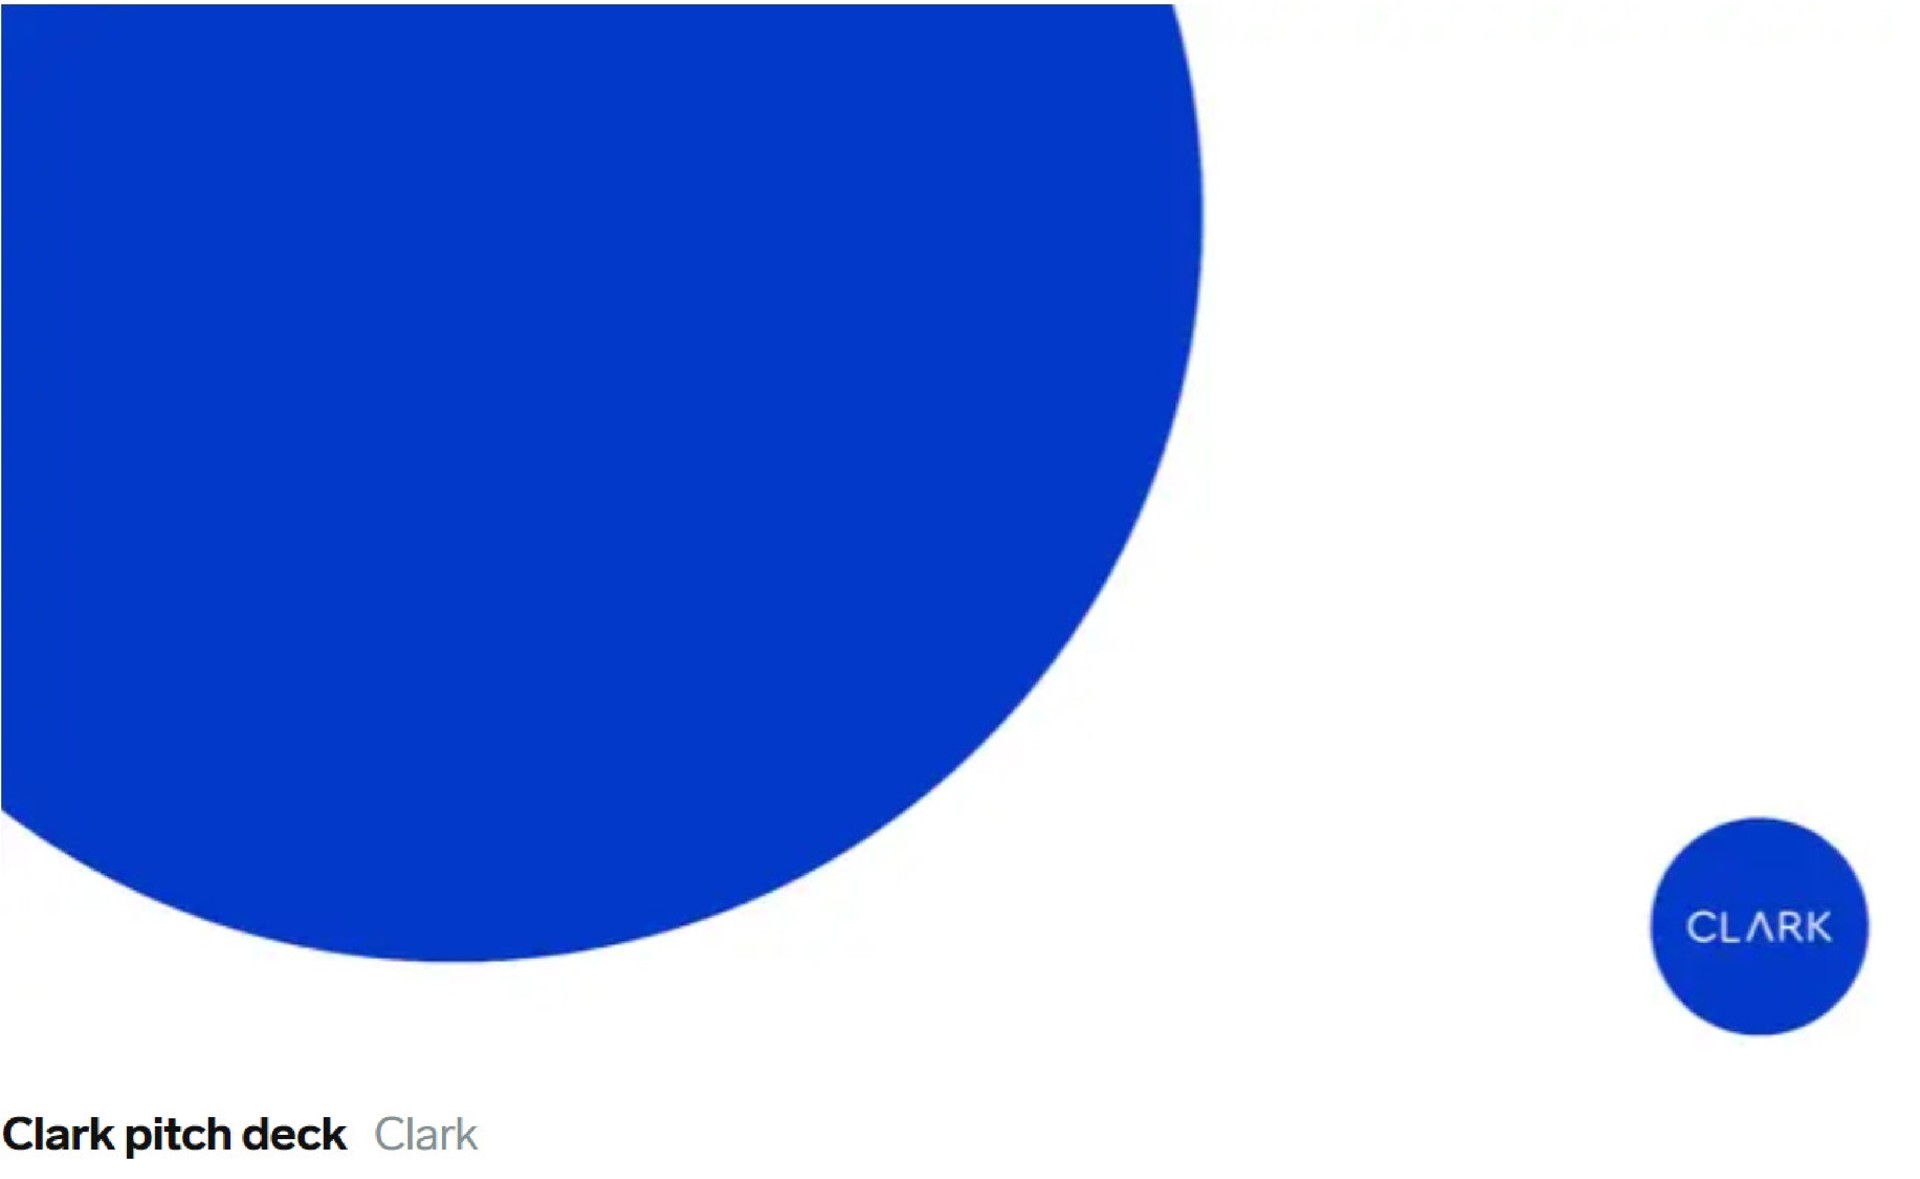 clark pitch deck clark | Clark